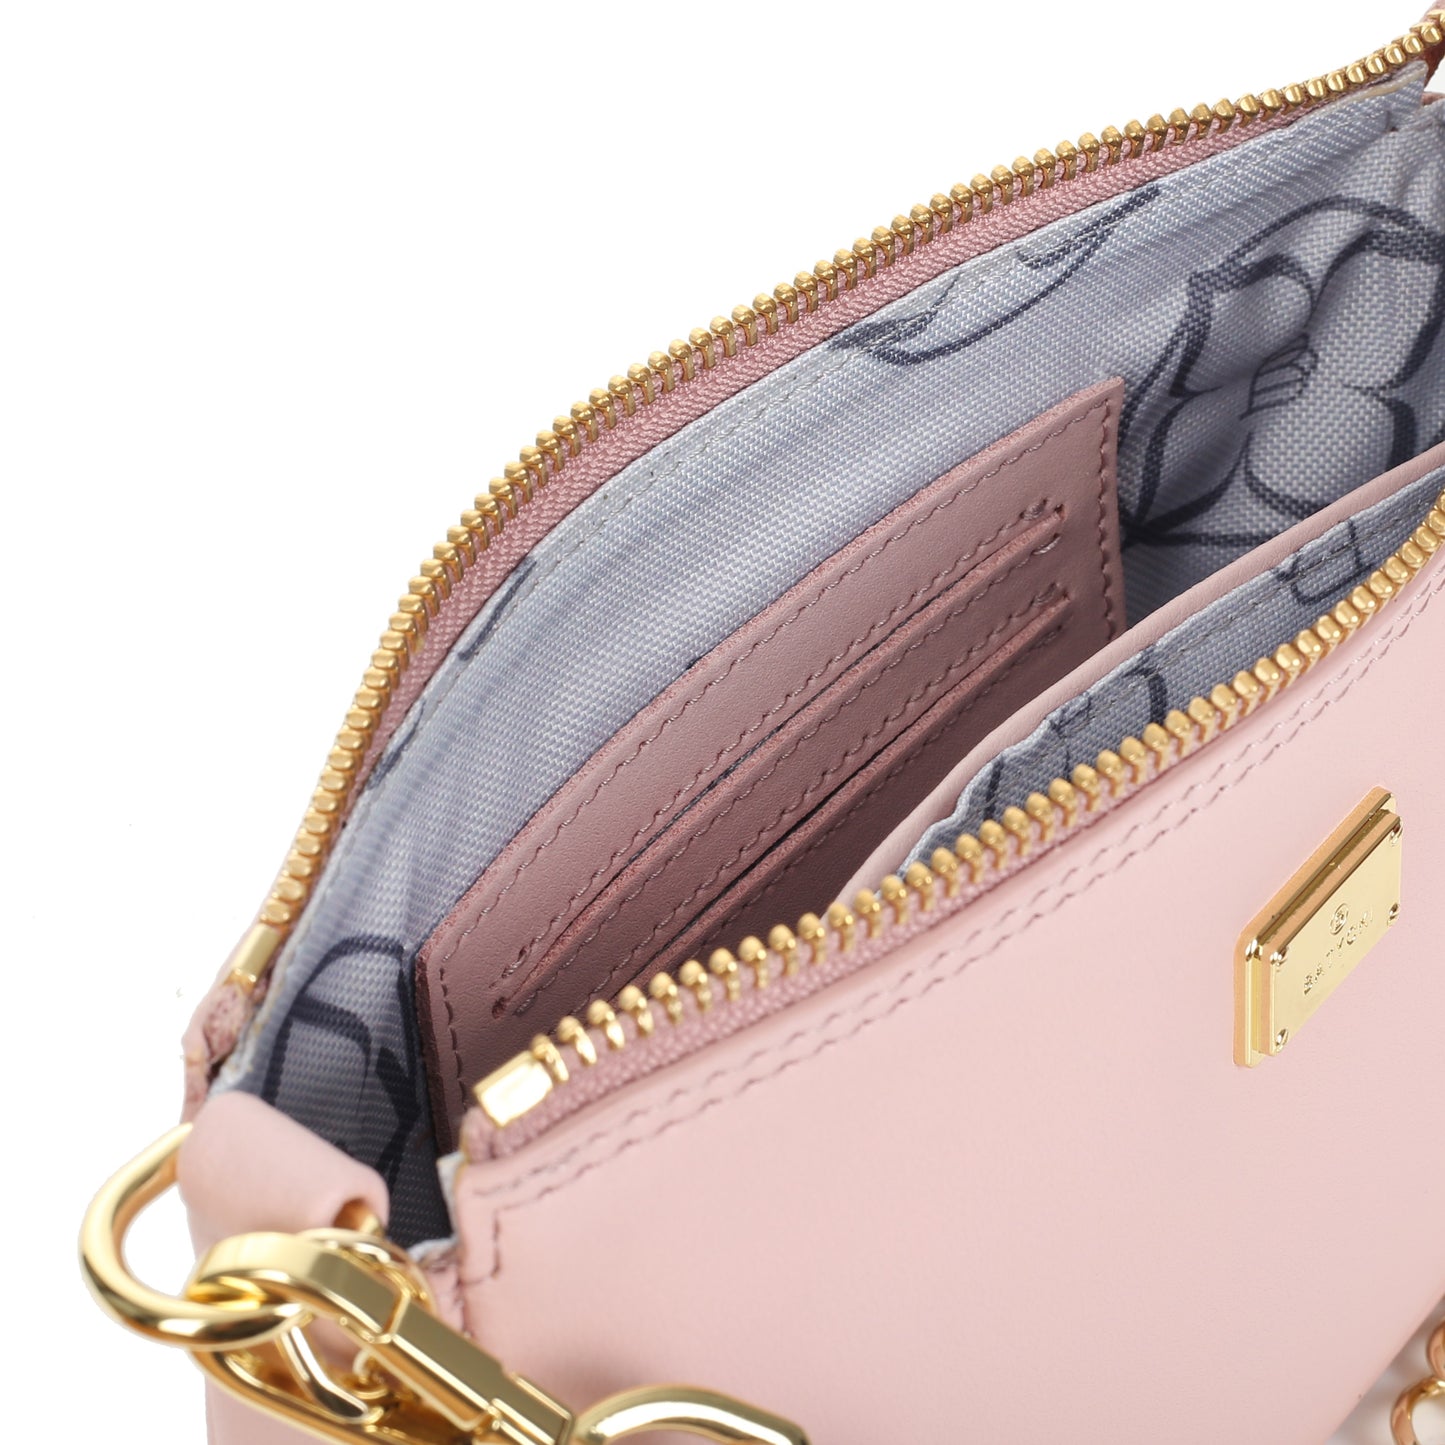 HARLEY MINI POWDER PINK women's leather handbag